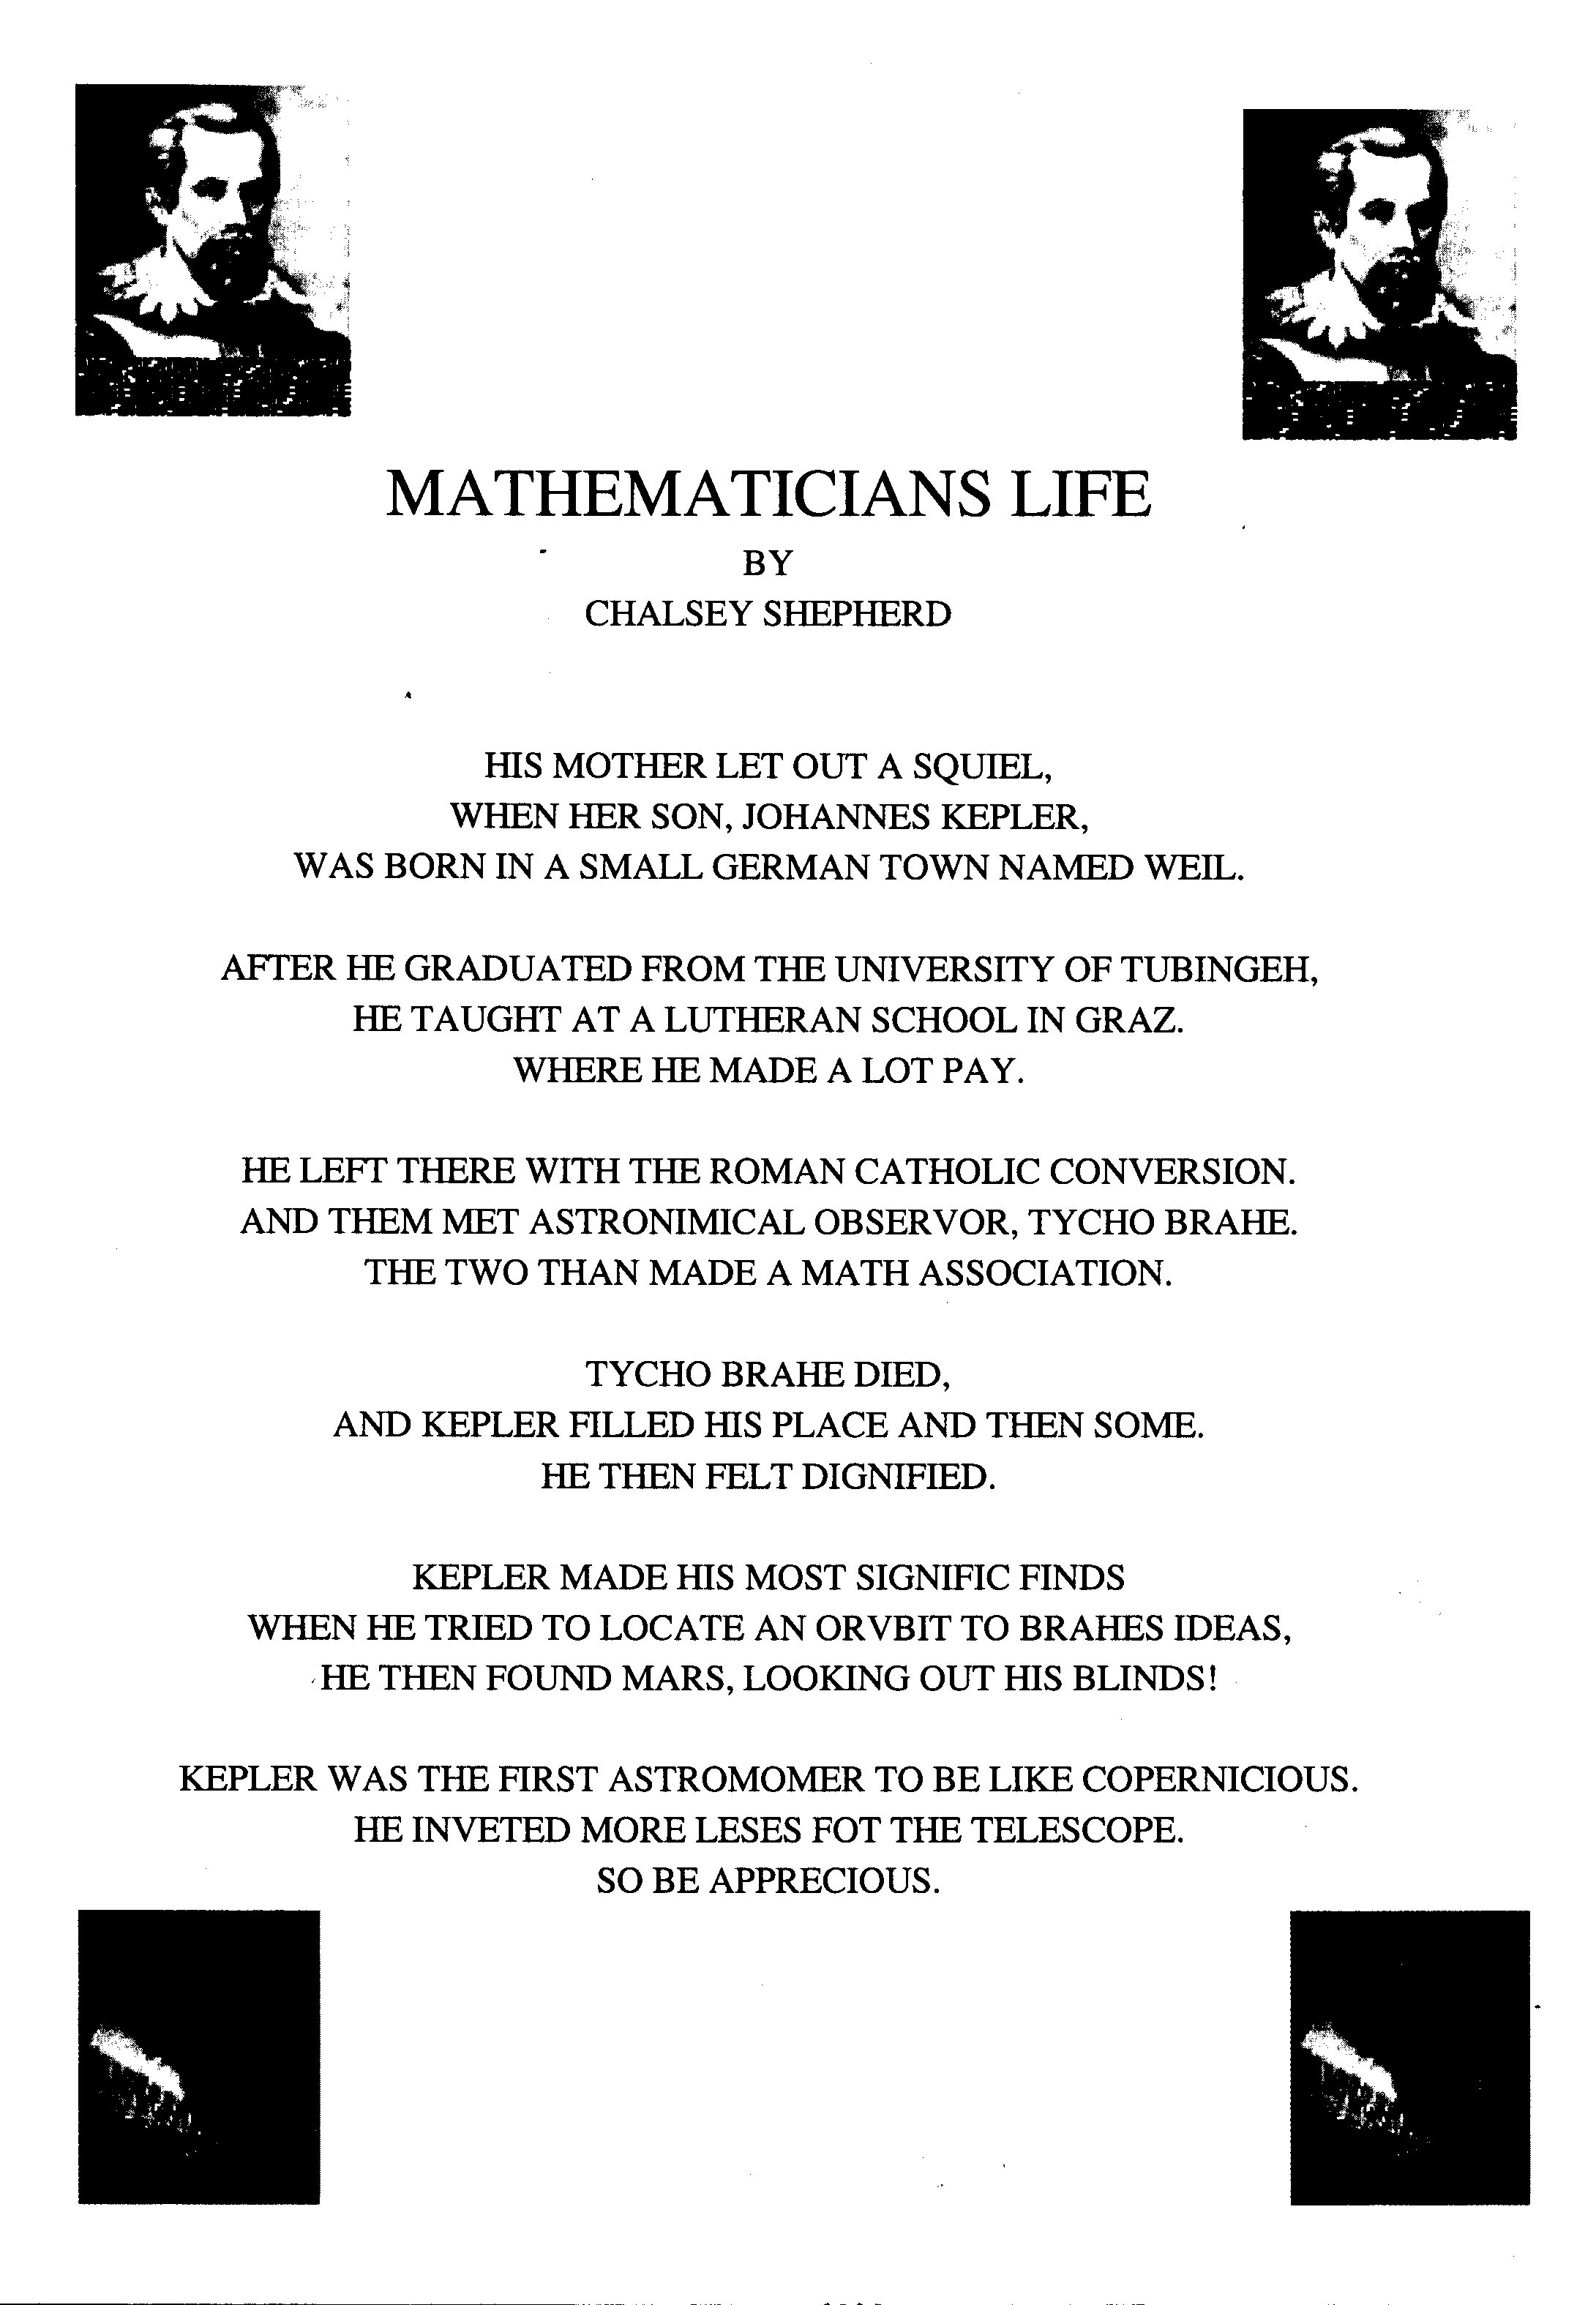 Mathematicians Life poem